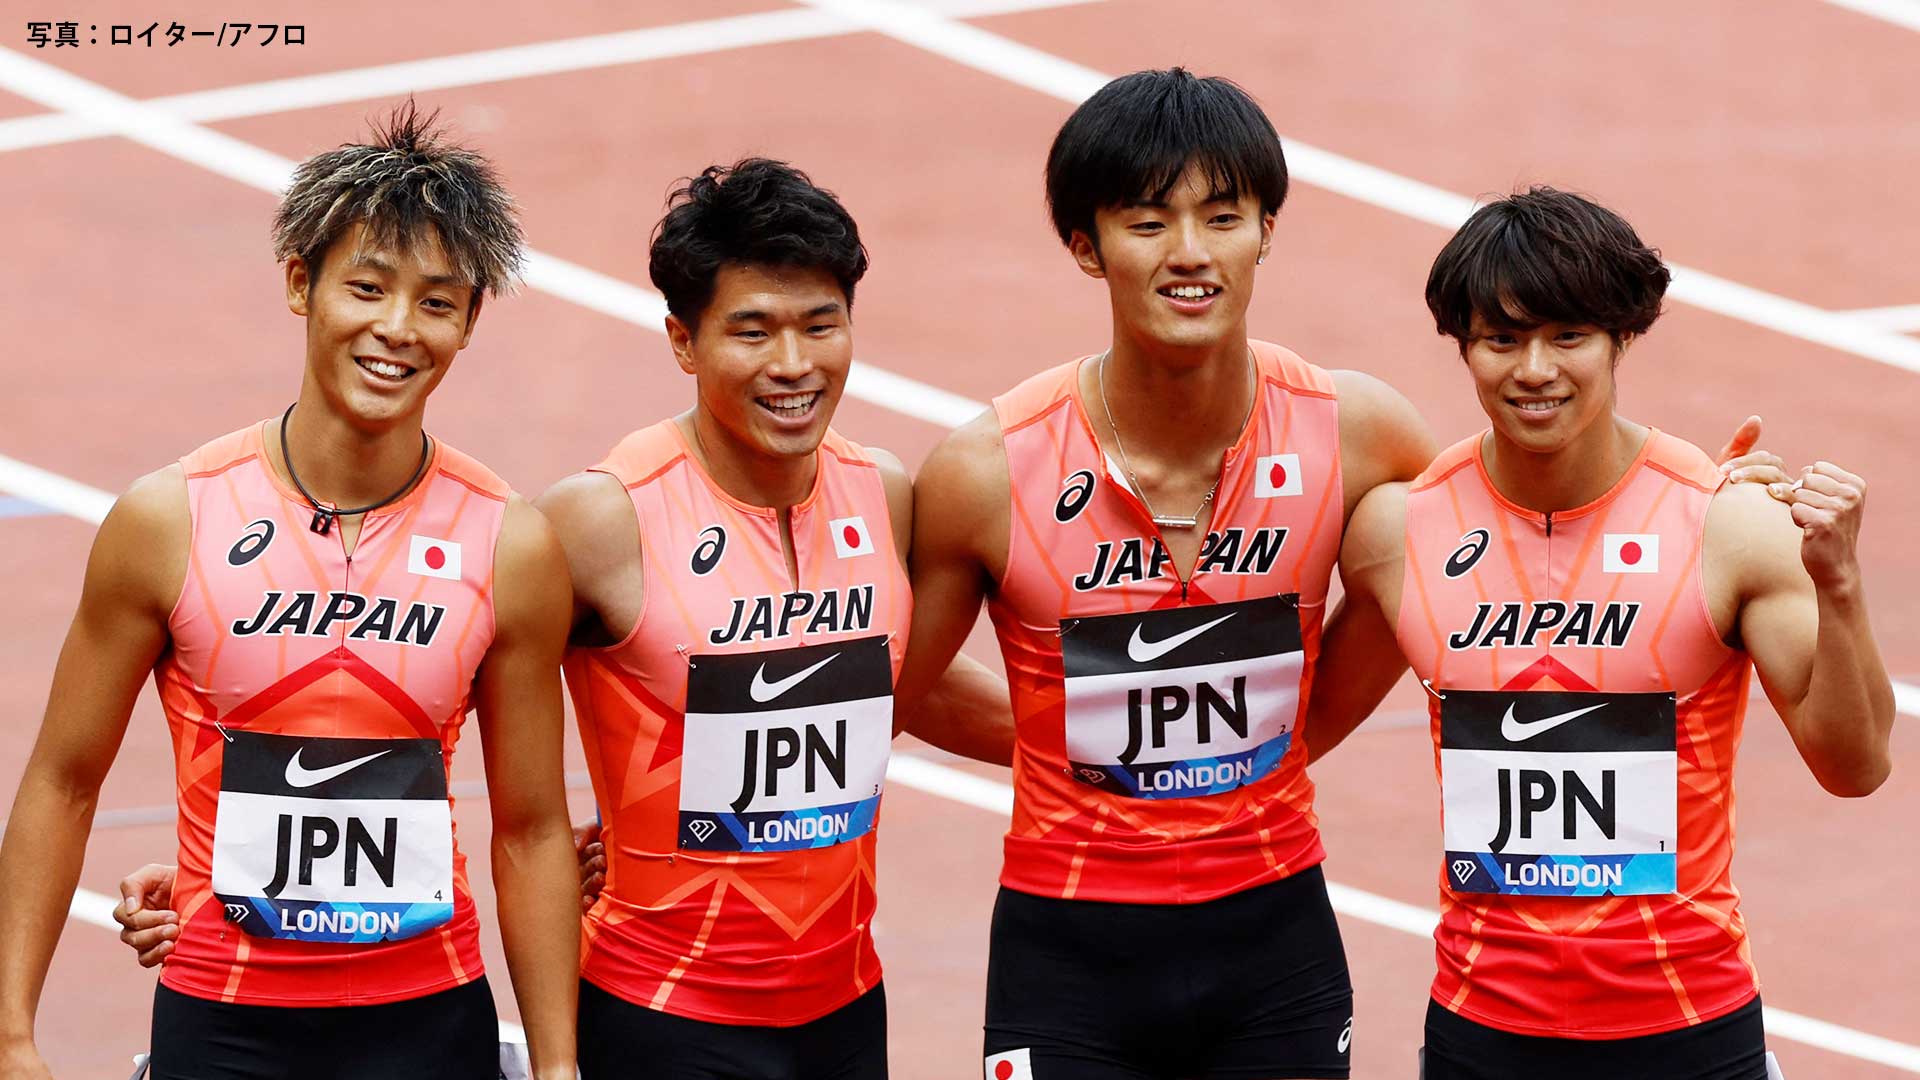 4×100mリレーで日本が37秒80の今季世界最高タイ 世界陸上ブダペスト 